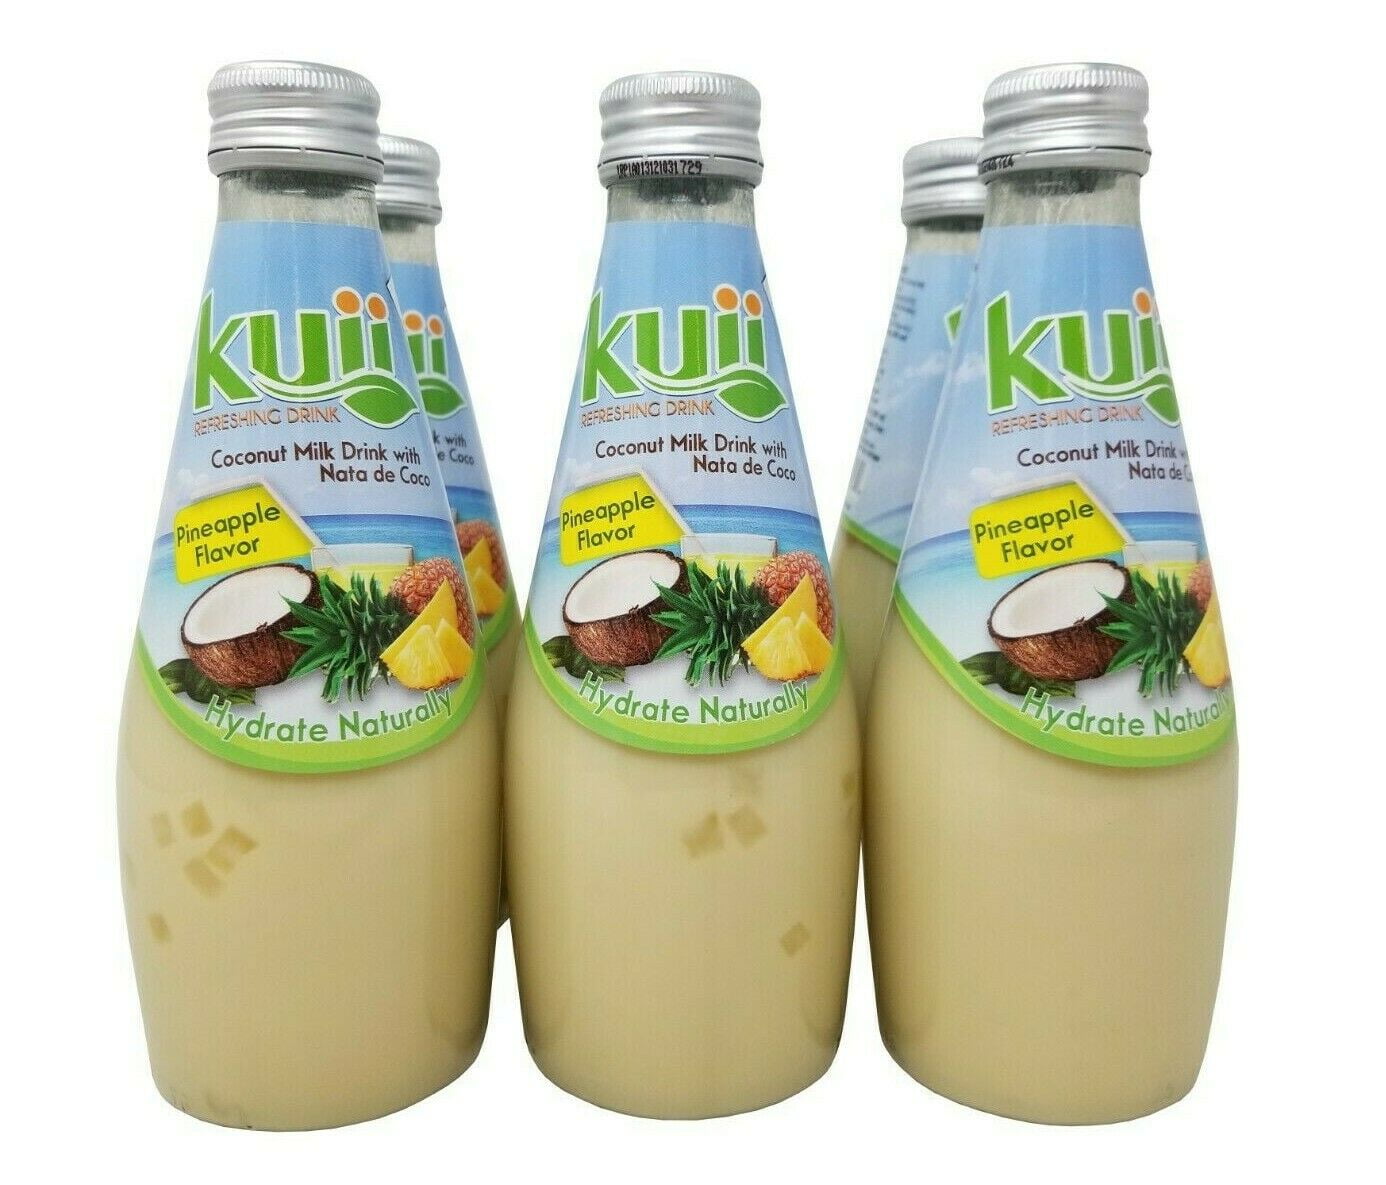 Kuii Coconut Milk Drink with Nata de Coco Pineapple Flavor 9.8 FL OZ